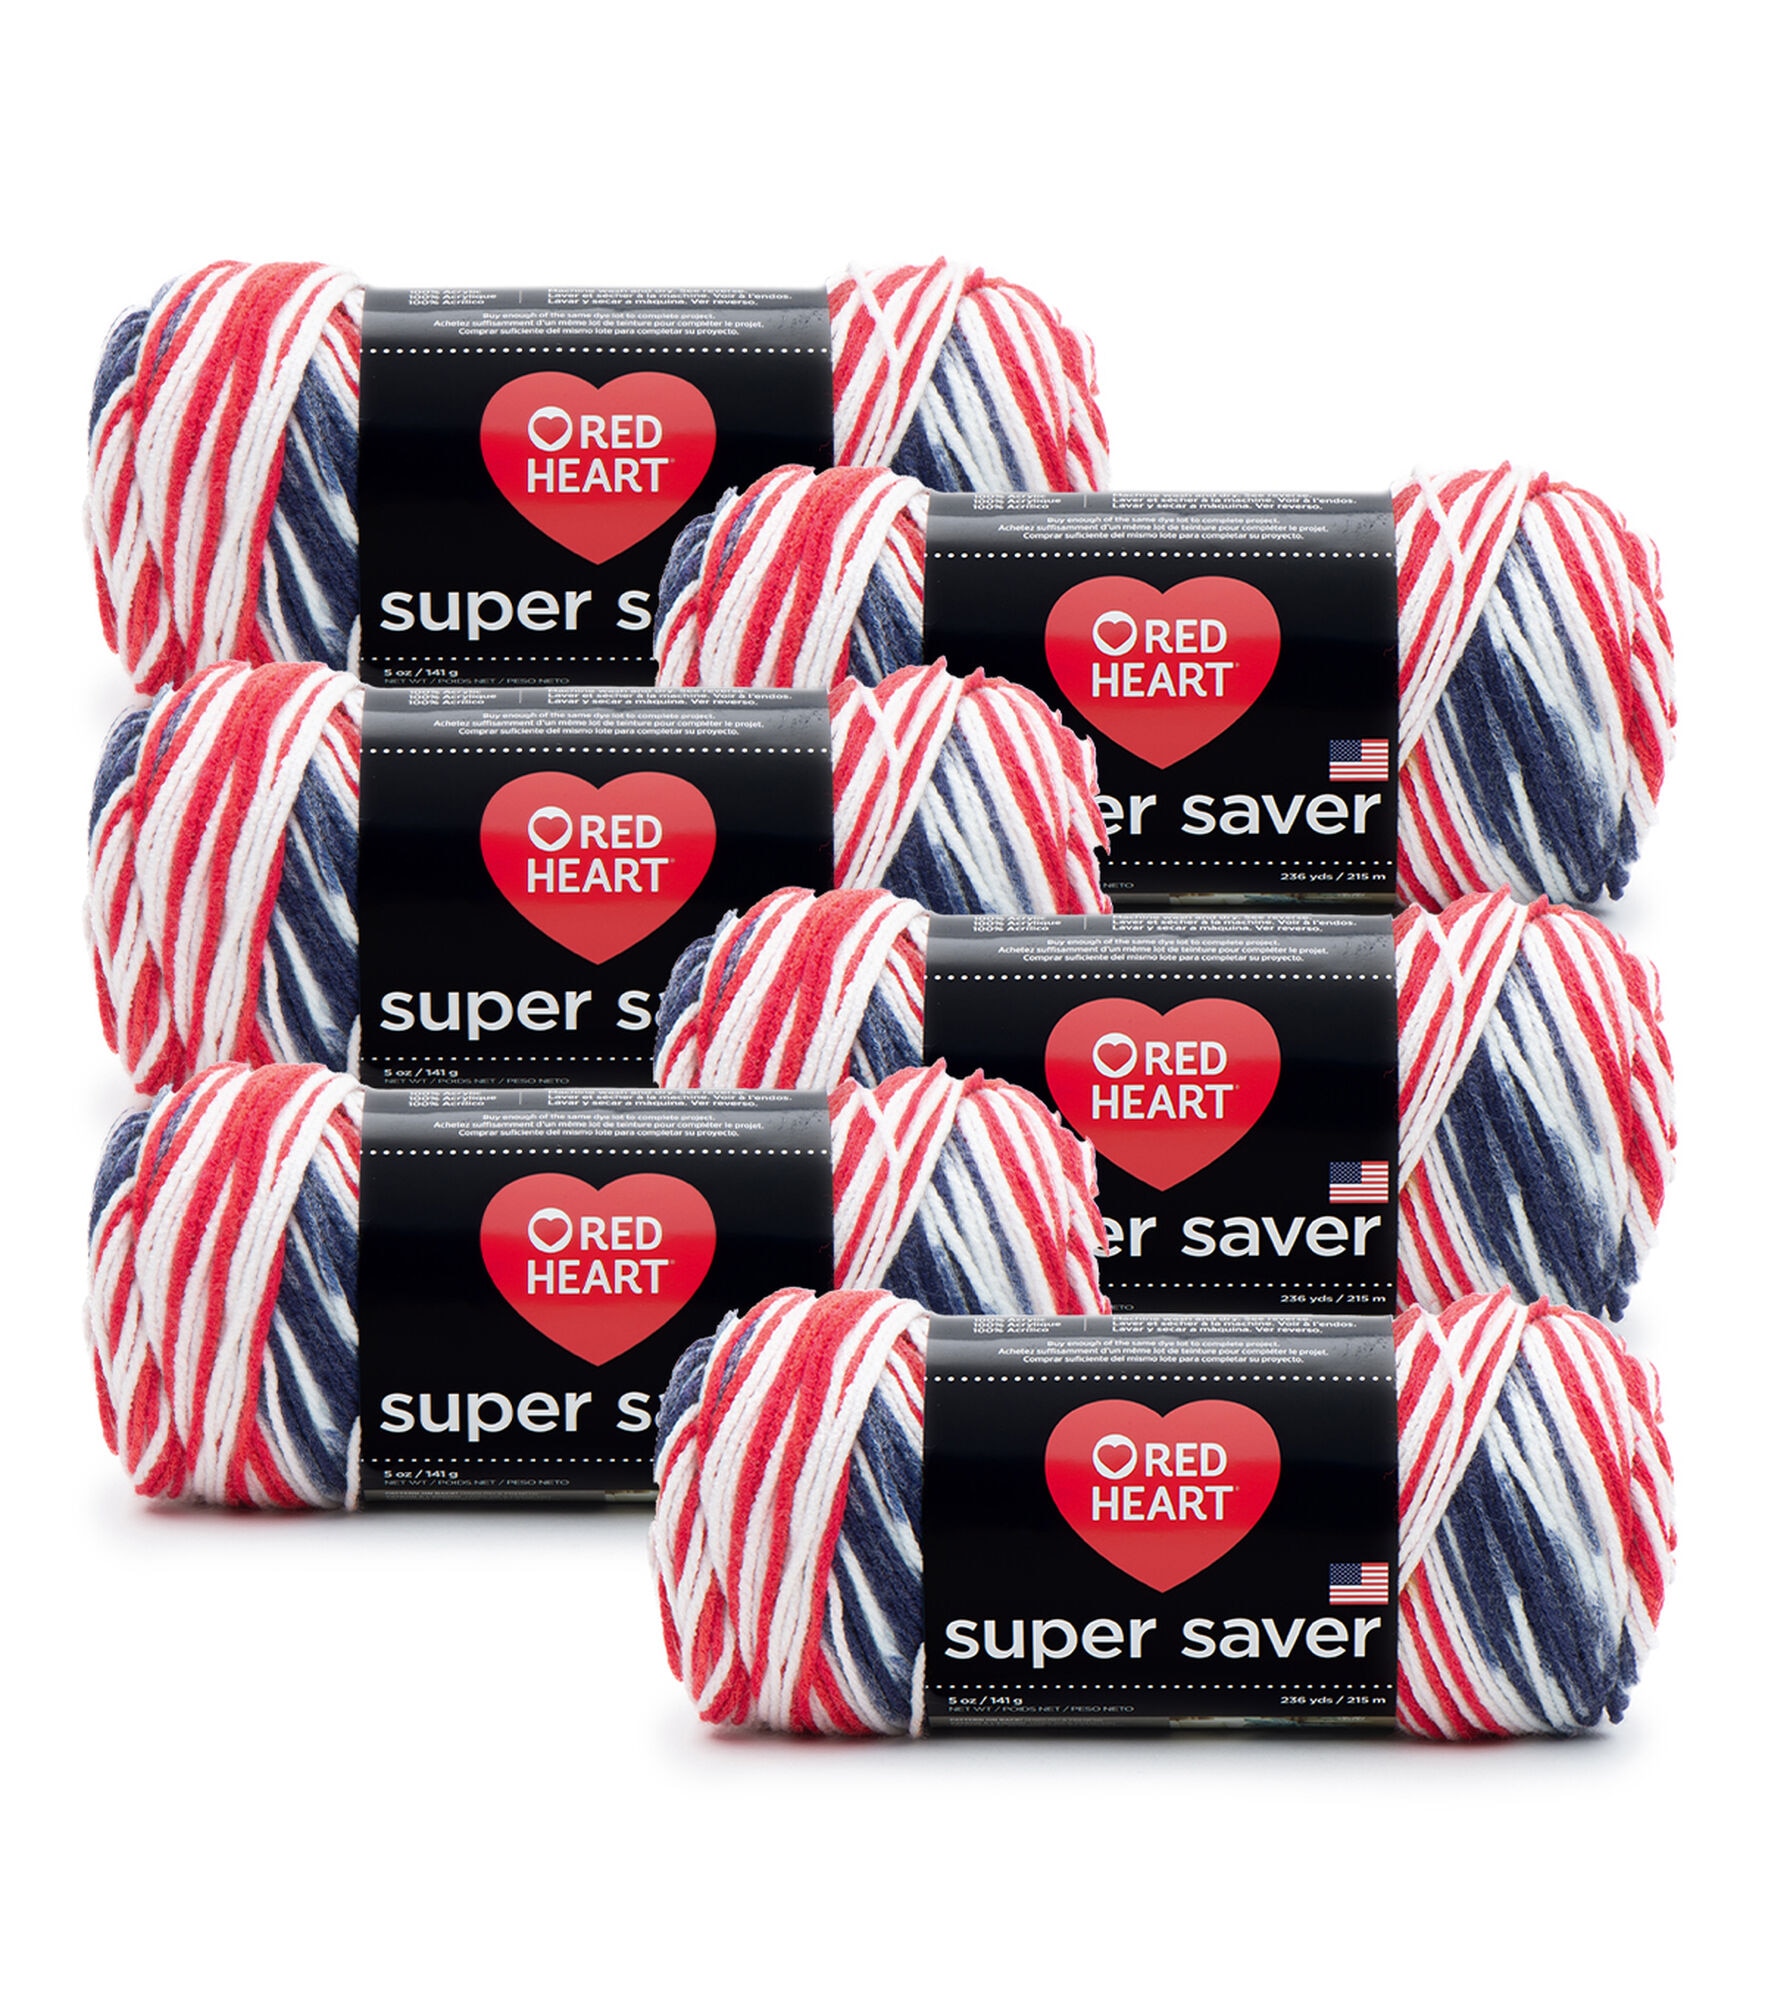 Red Heart Super Saver Yarn - Soapstone